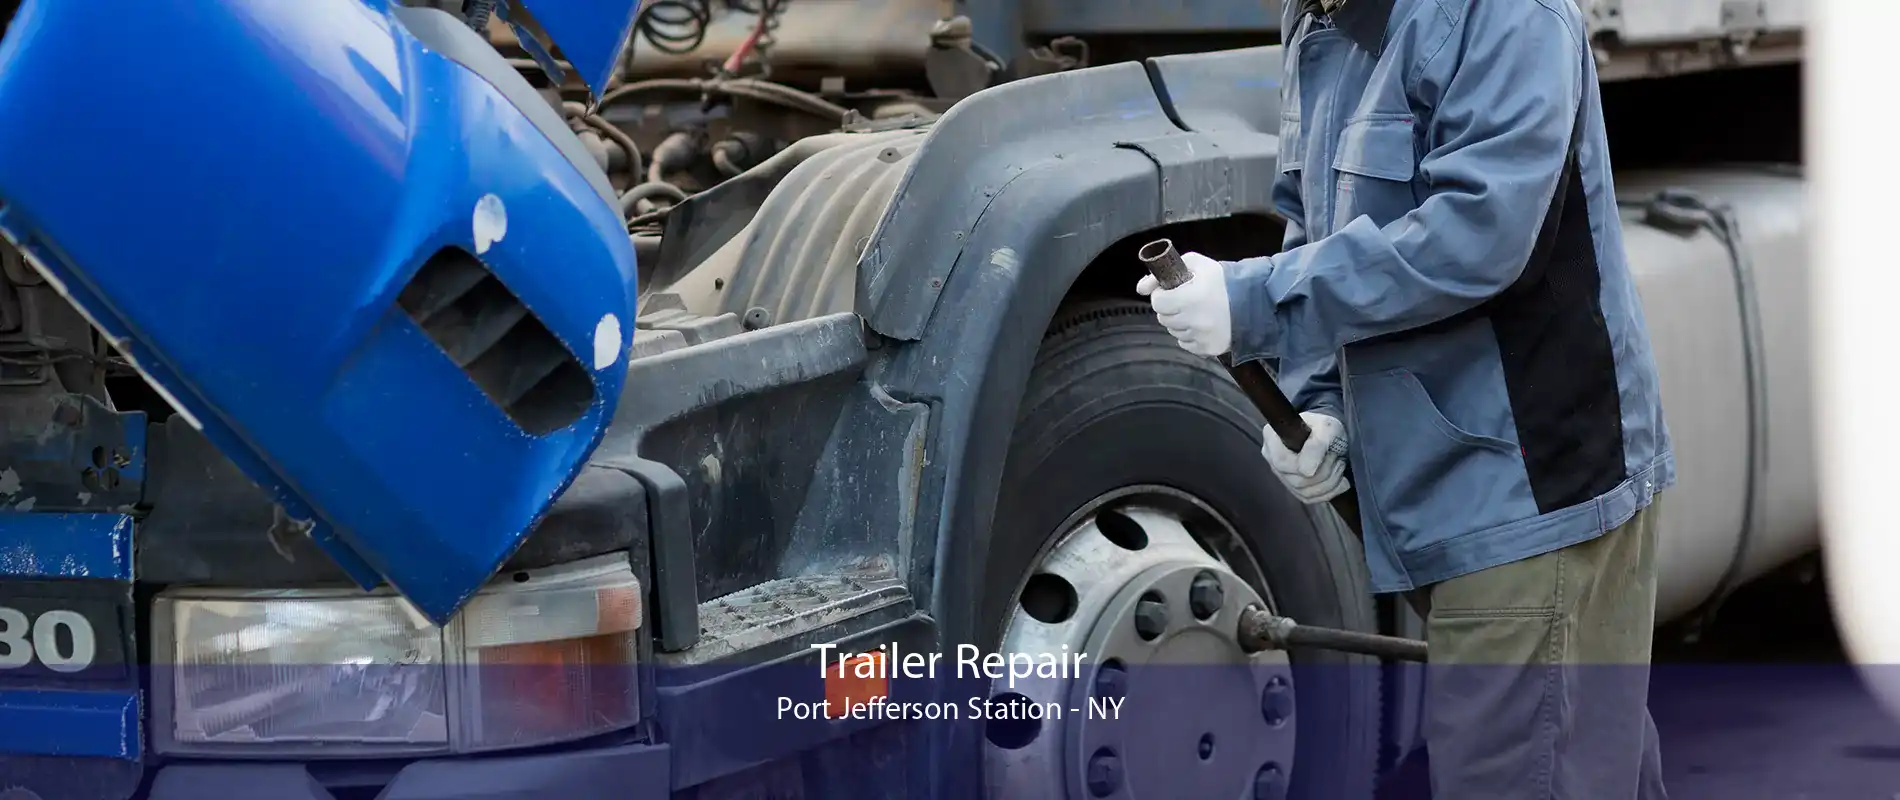 Trailer Repair Port Jefferson Station - NY